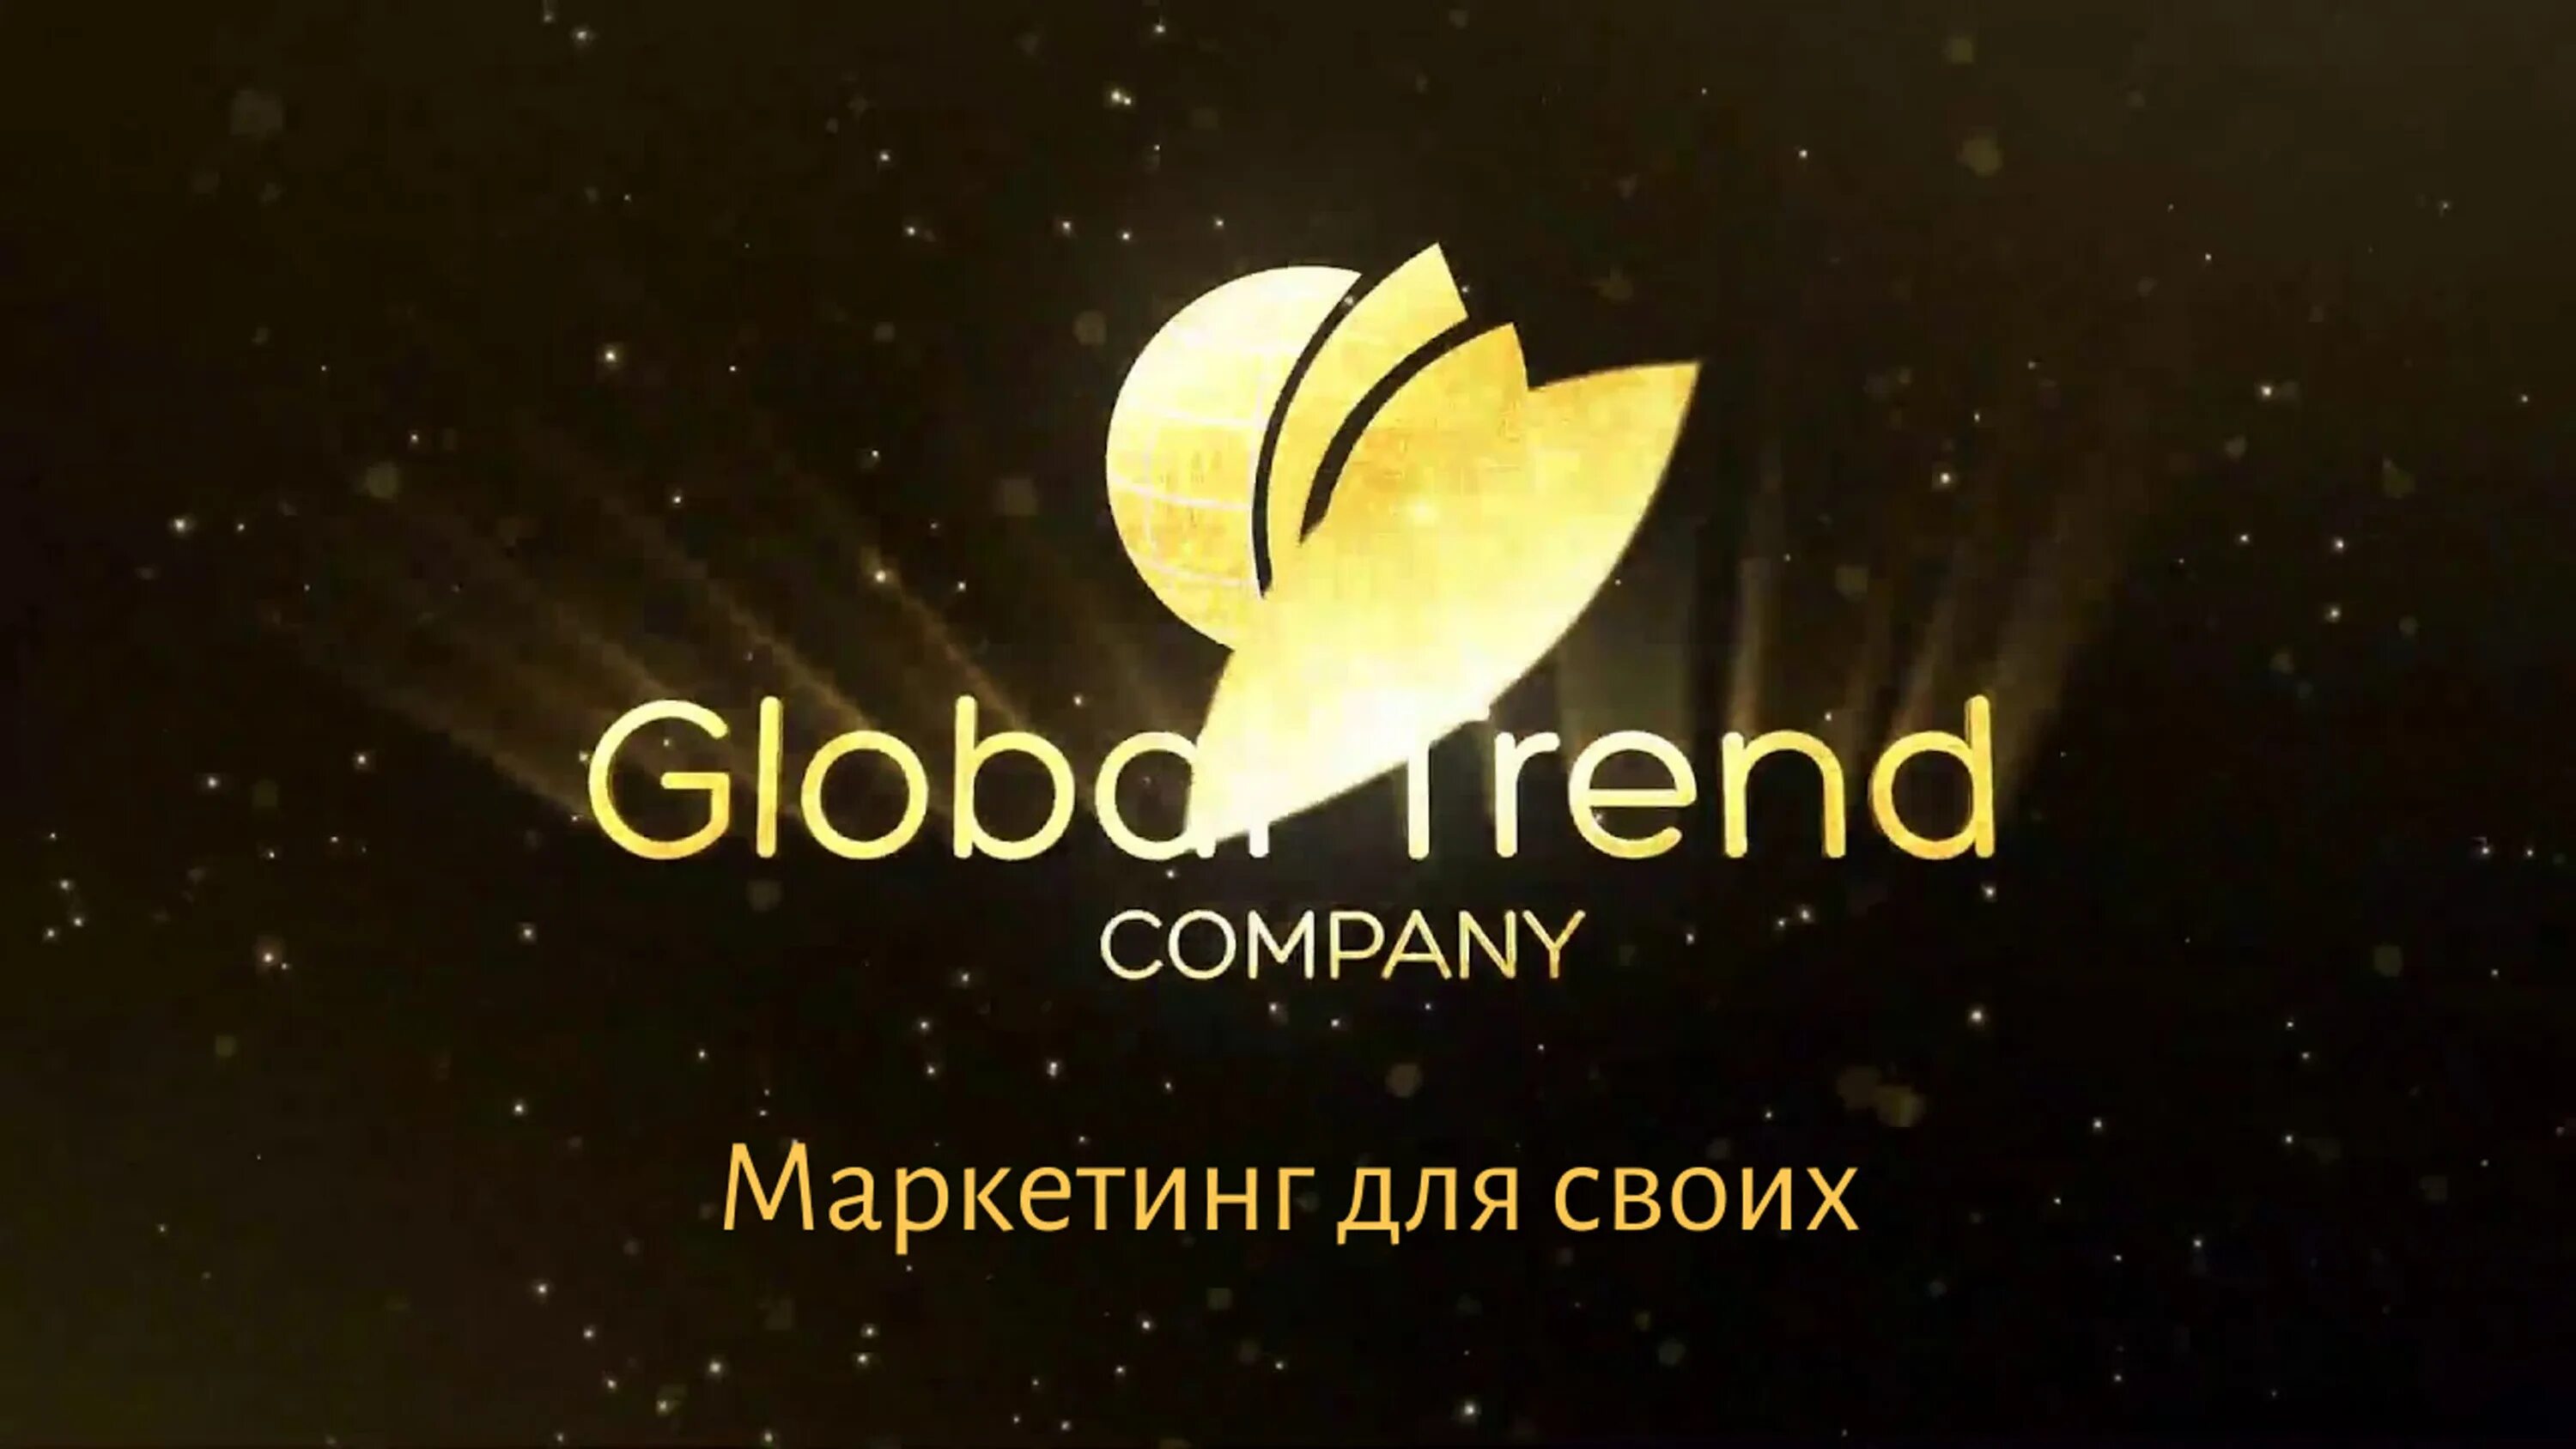 Глобал тренд. Логотип компании Global trend. Картинки Глобал тренд Компани. Глобал тренд продукция. Global trend company кабинет